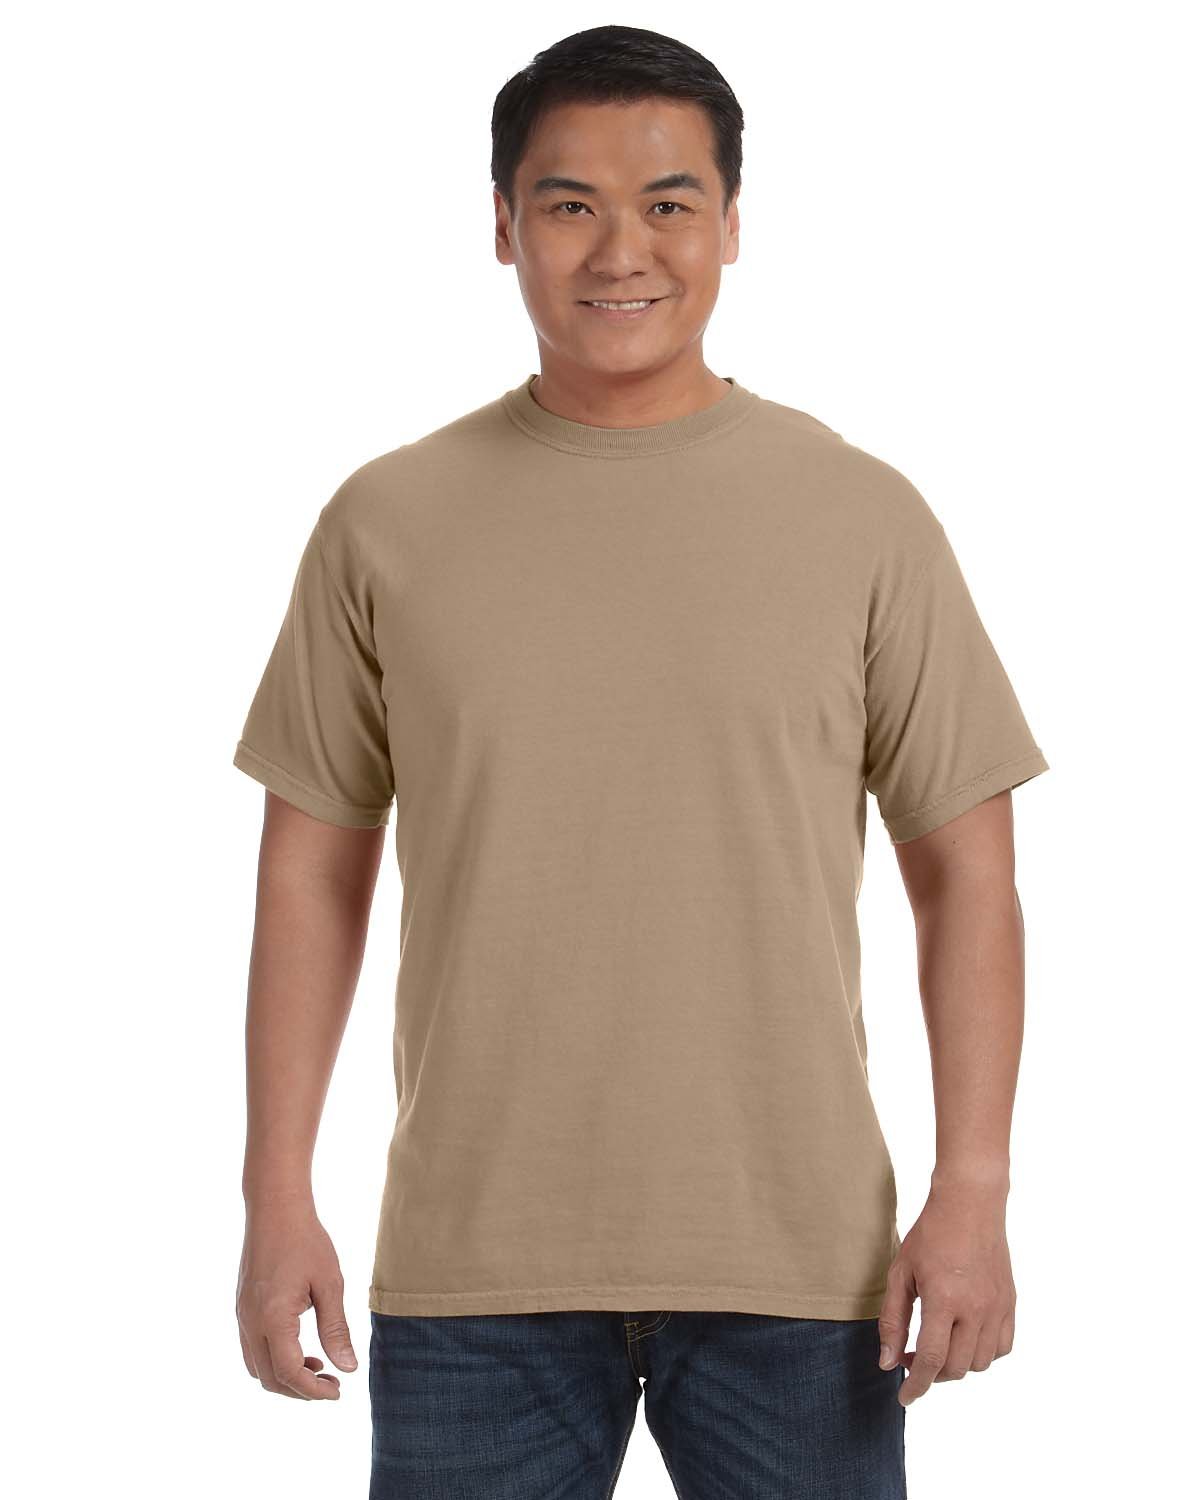 Comfort Colors C1717 Adult Heavyweight T-Shirt - Light Green